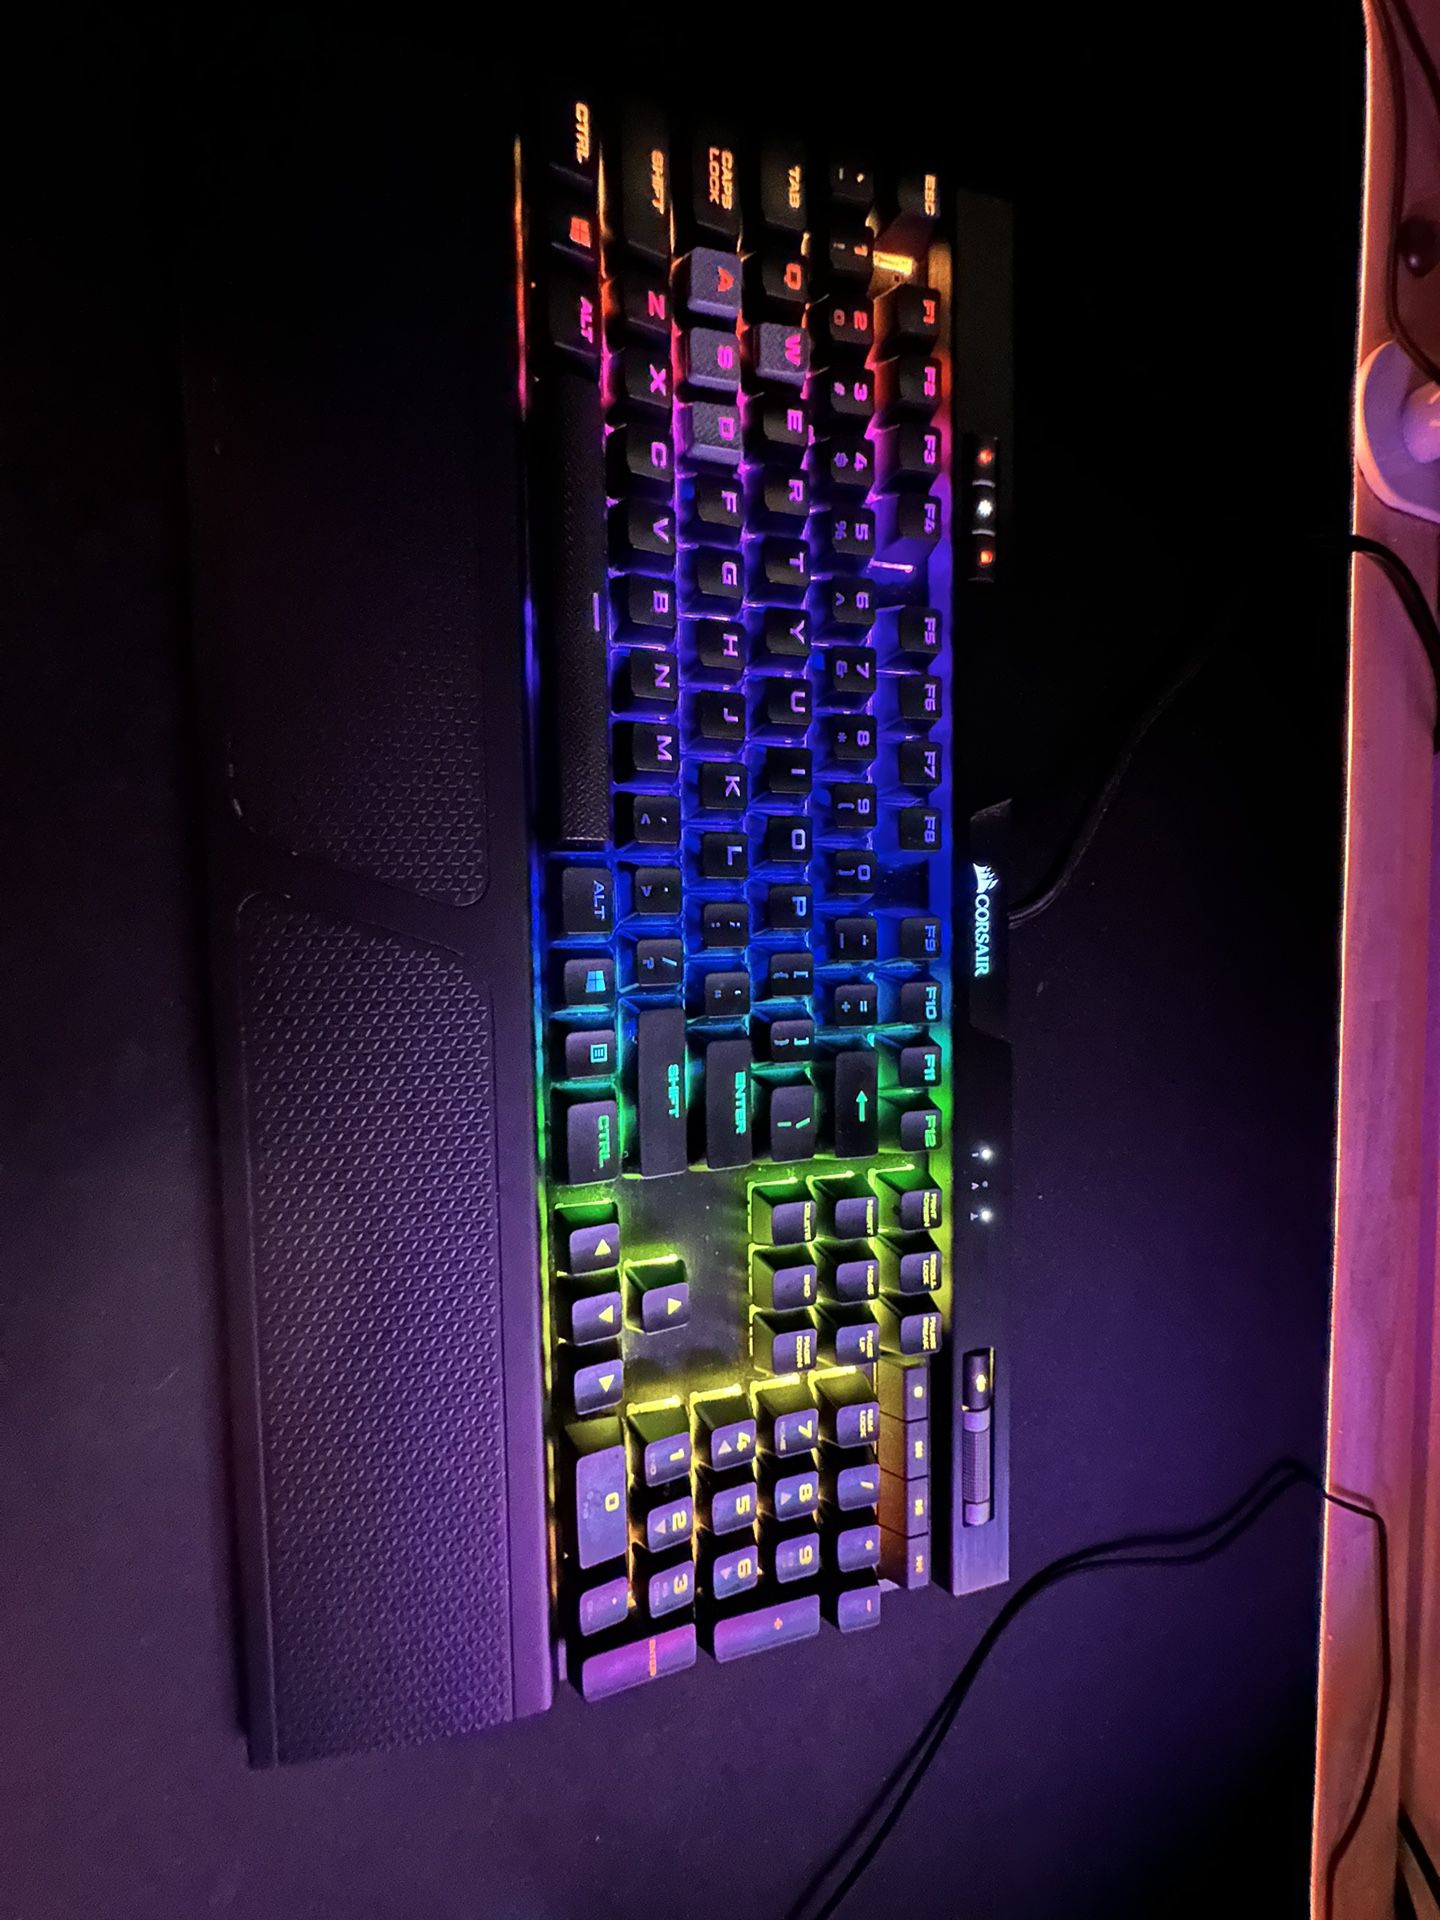 Corsair K70 RGB keyboard